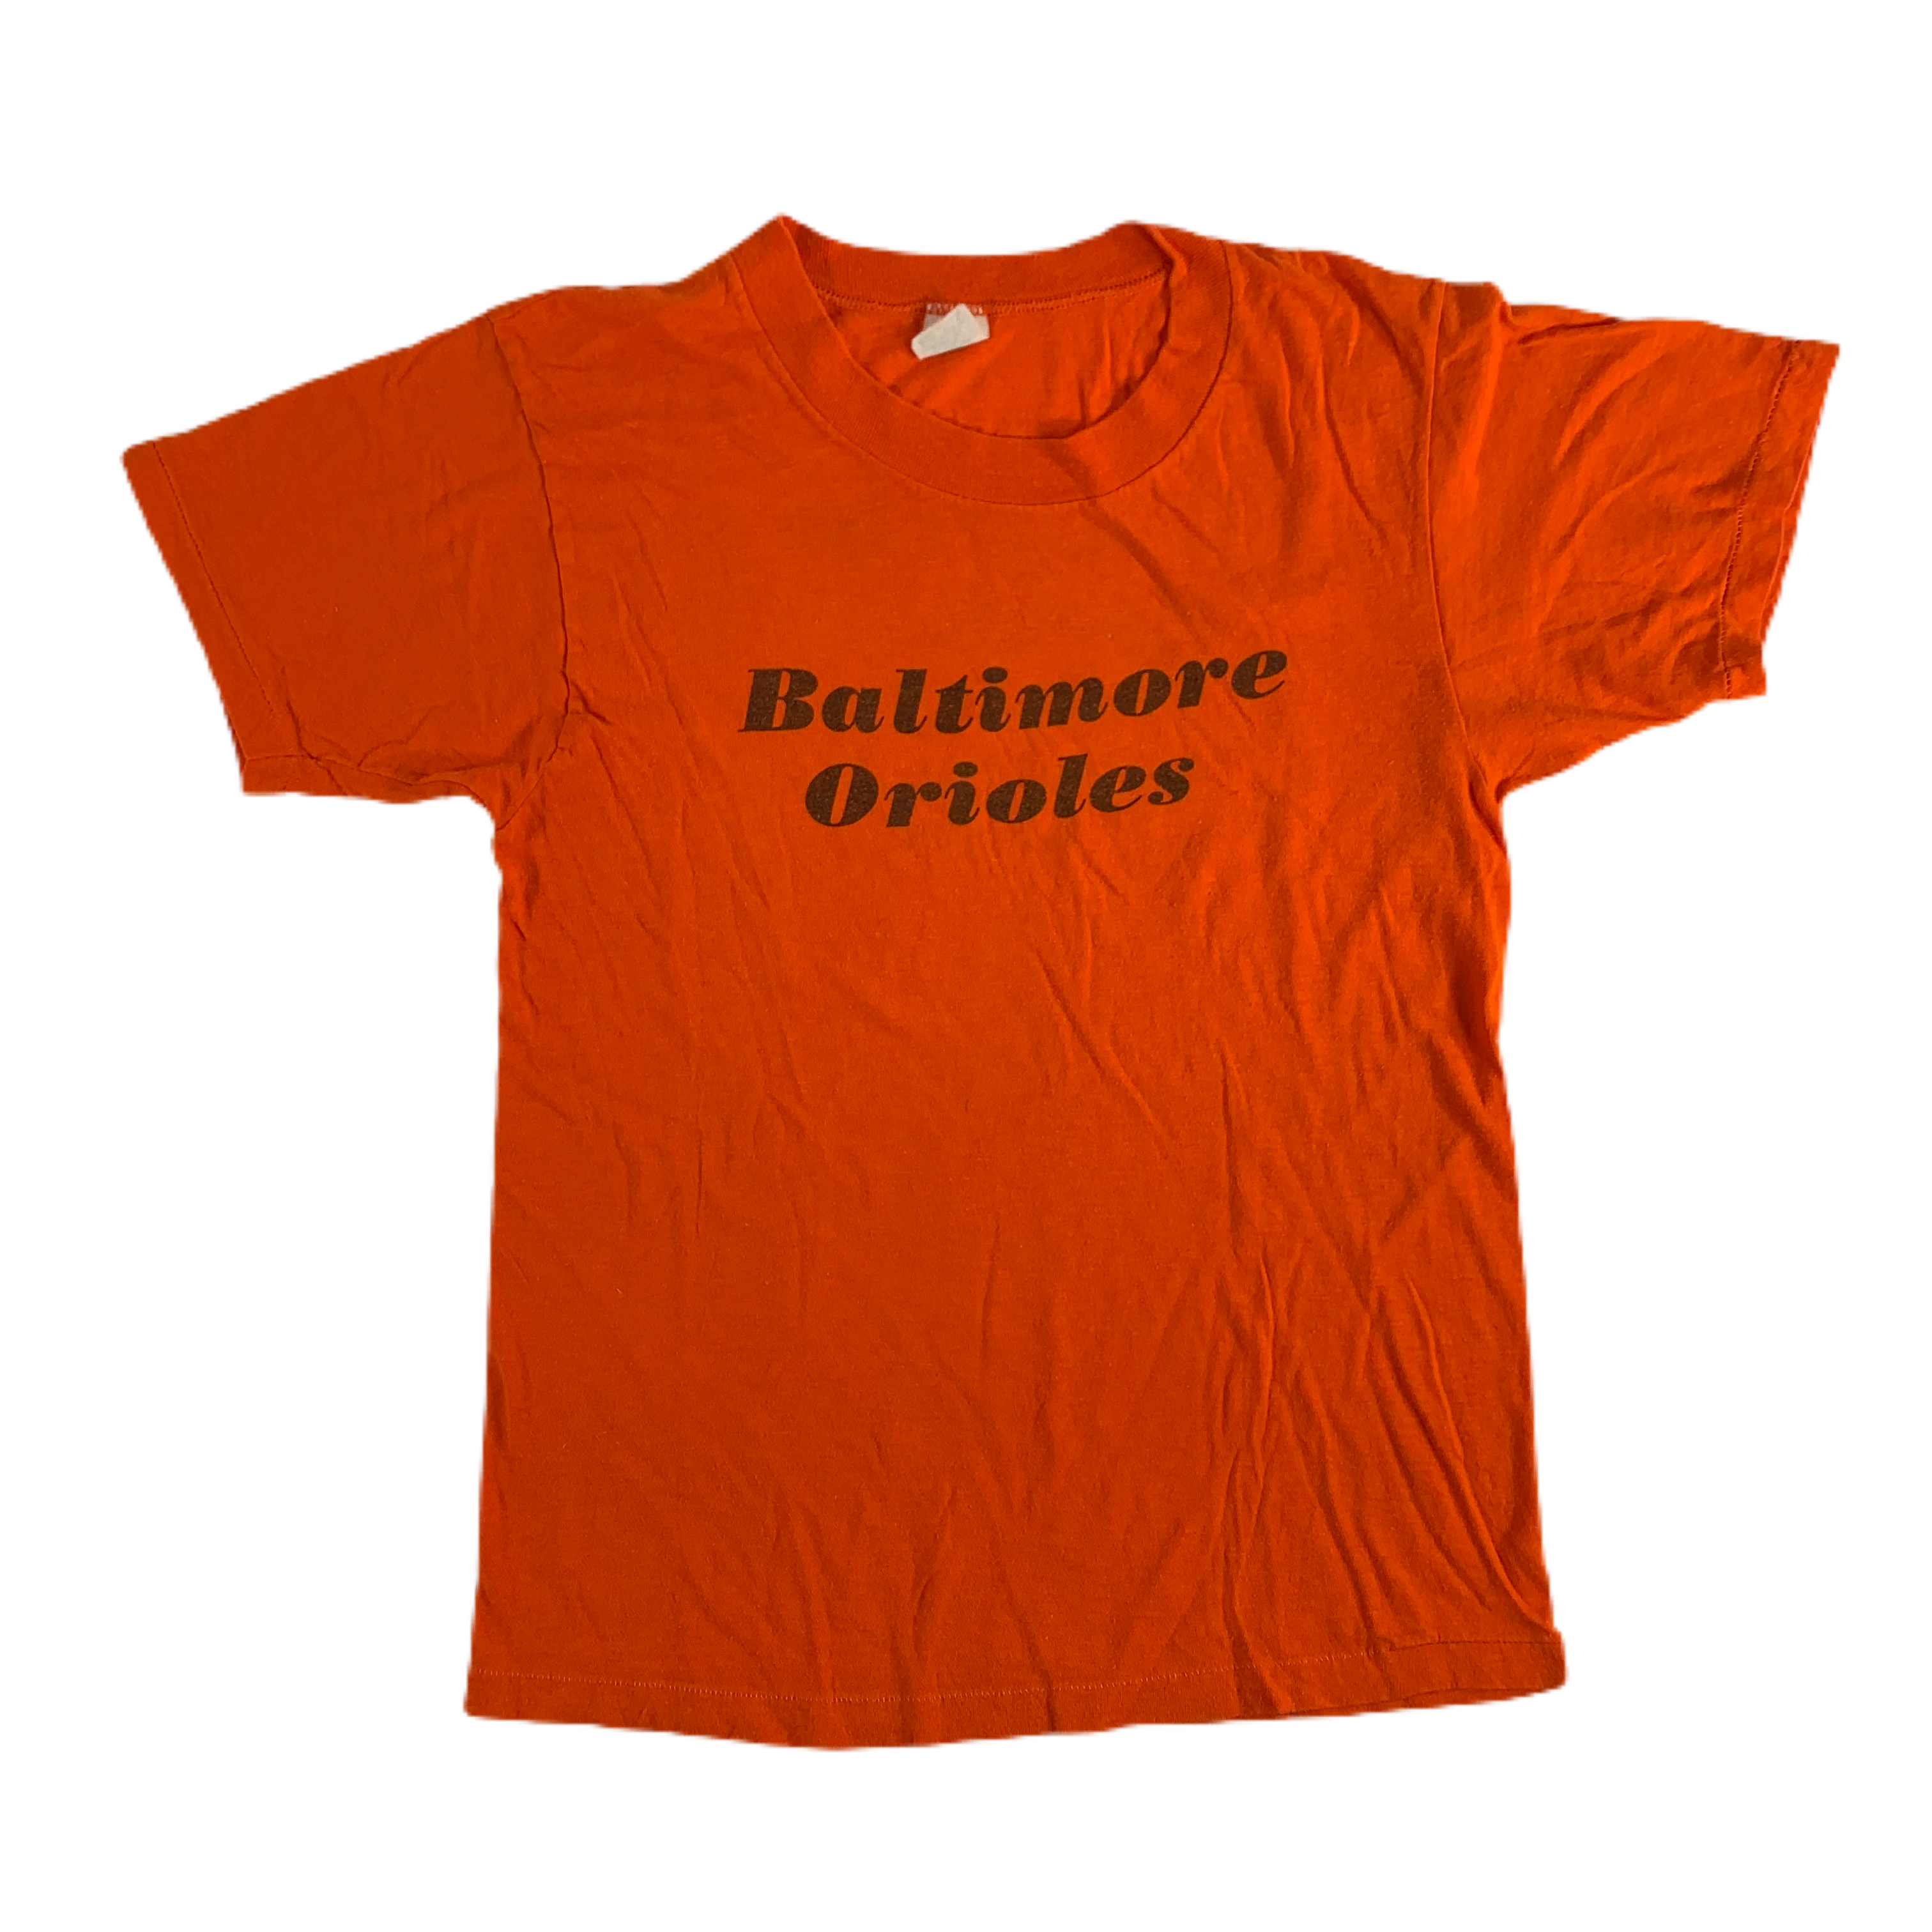 Nike Baltimore Orioles shirt small